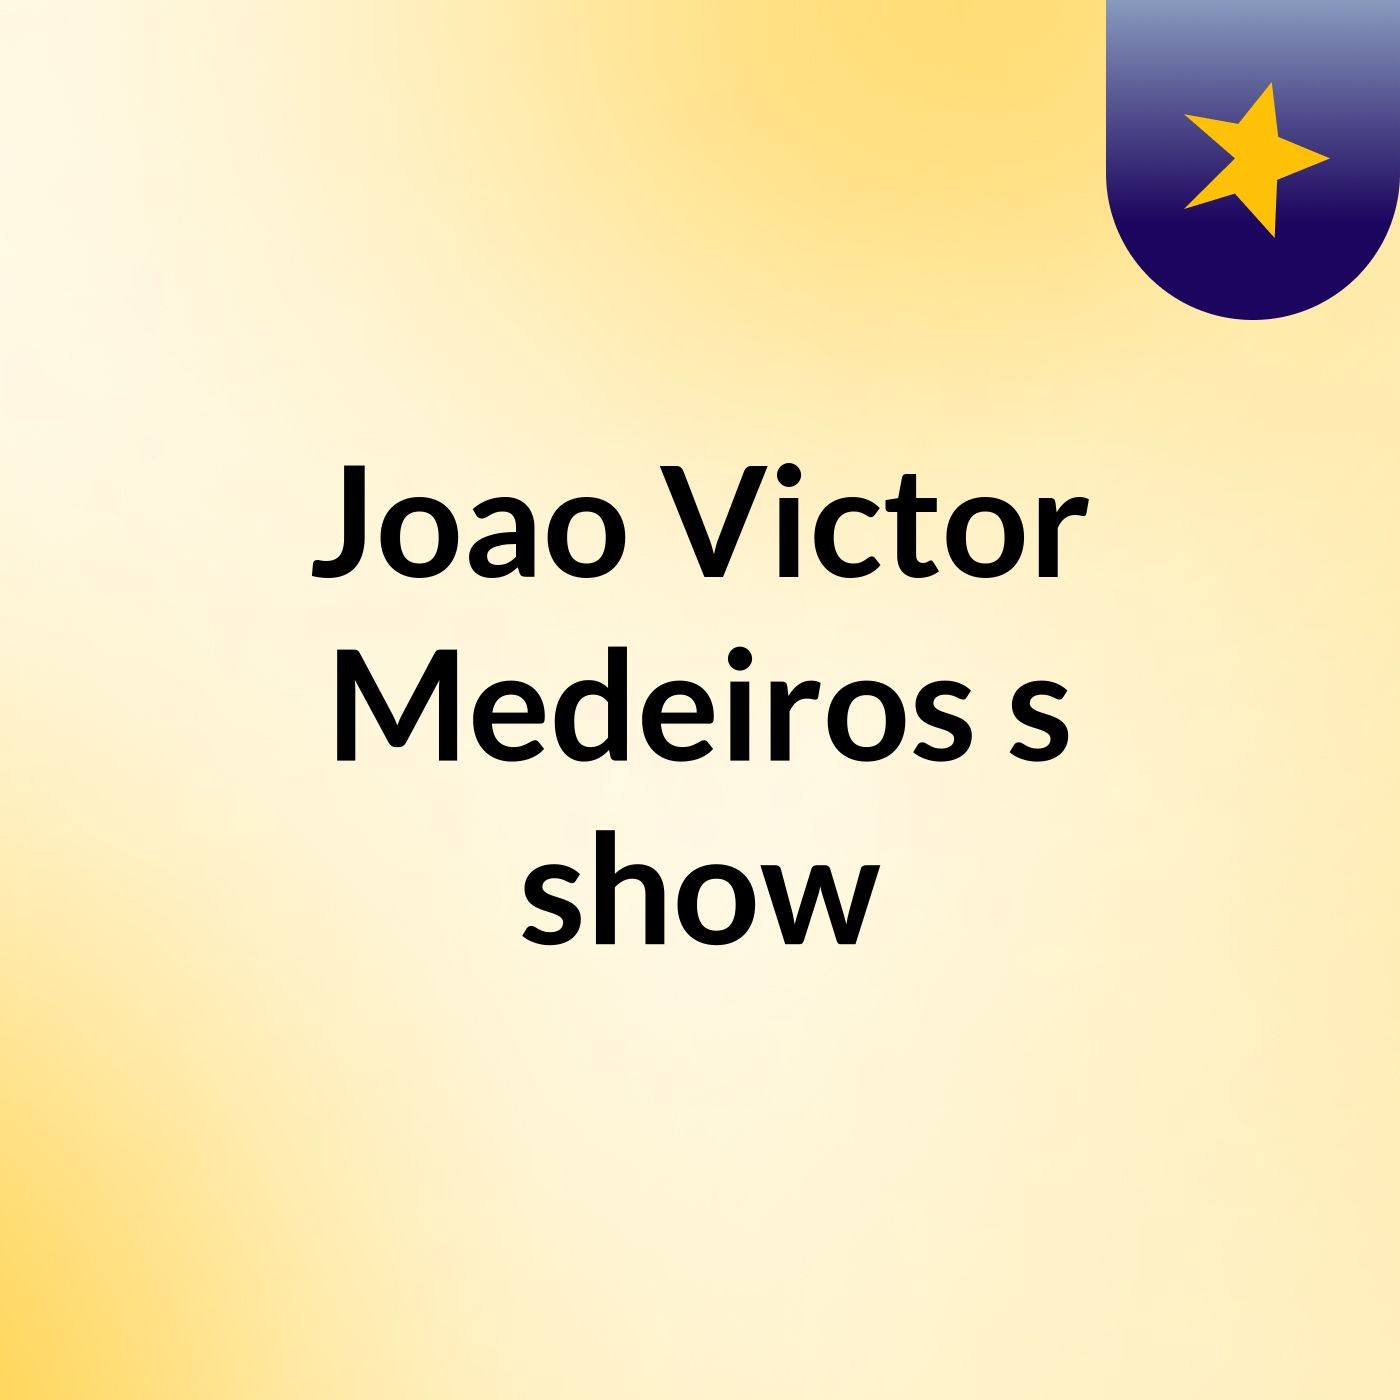 Joao Victor Medeiros's show